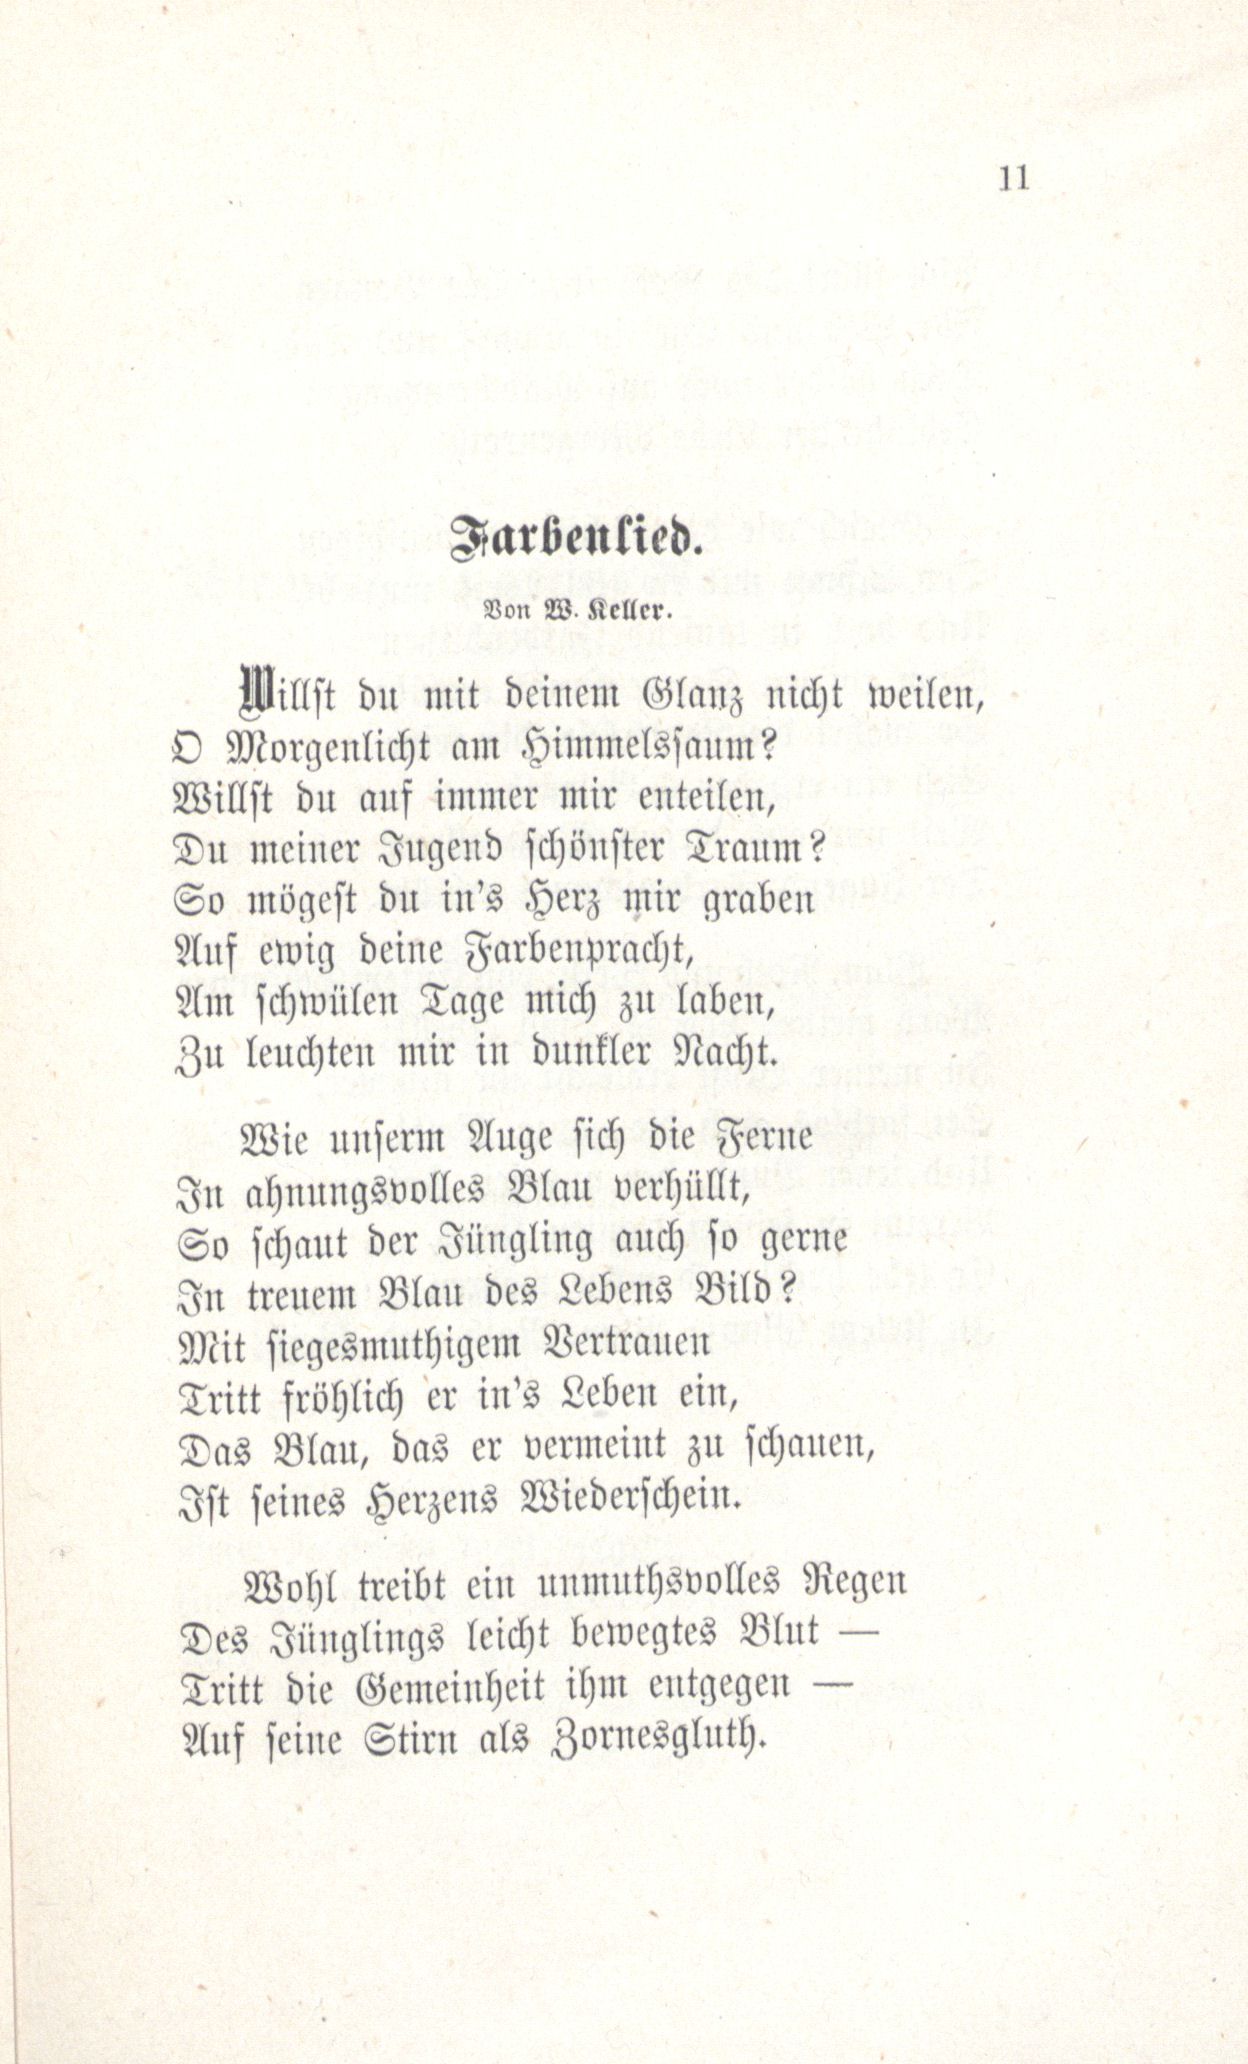 Erinnerung an die Fraternitas (1880) | 12. (11) Main body of text